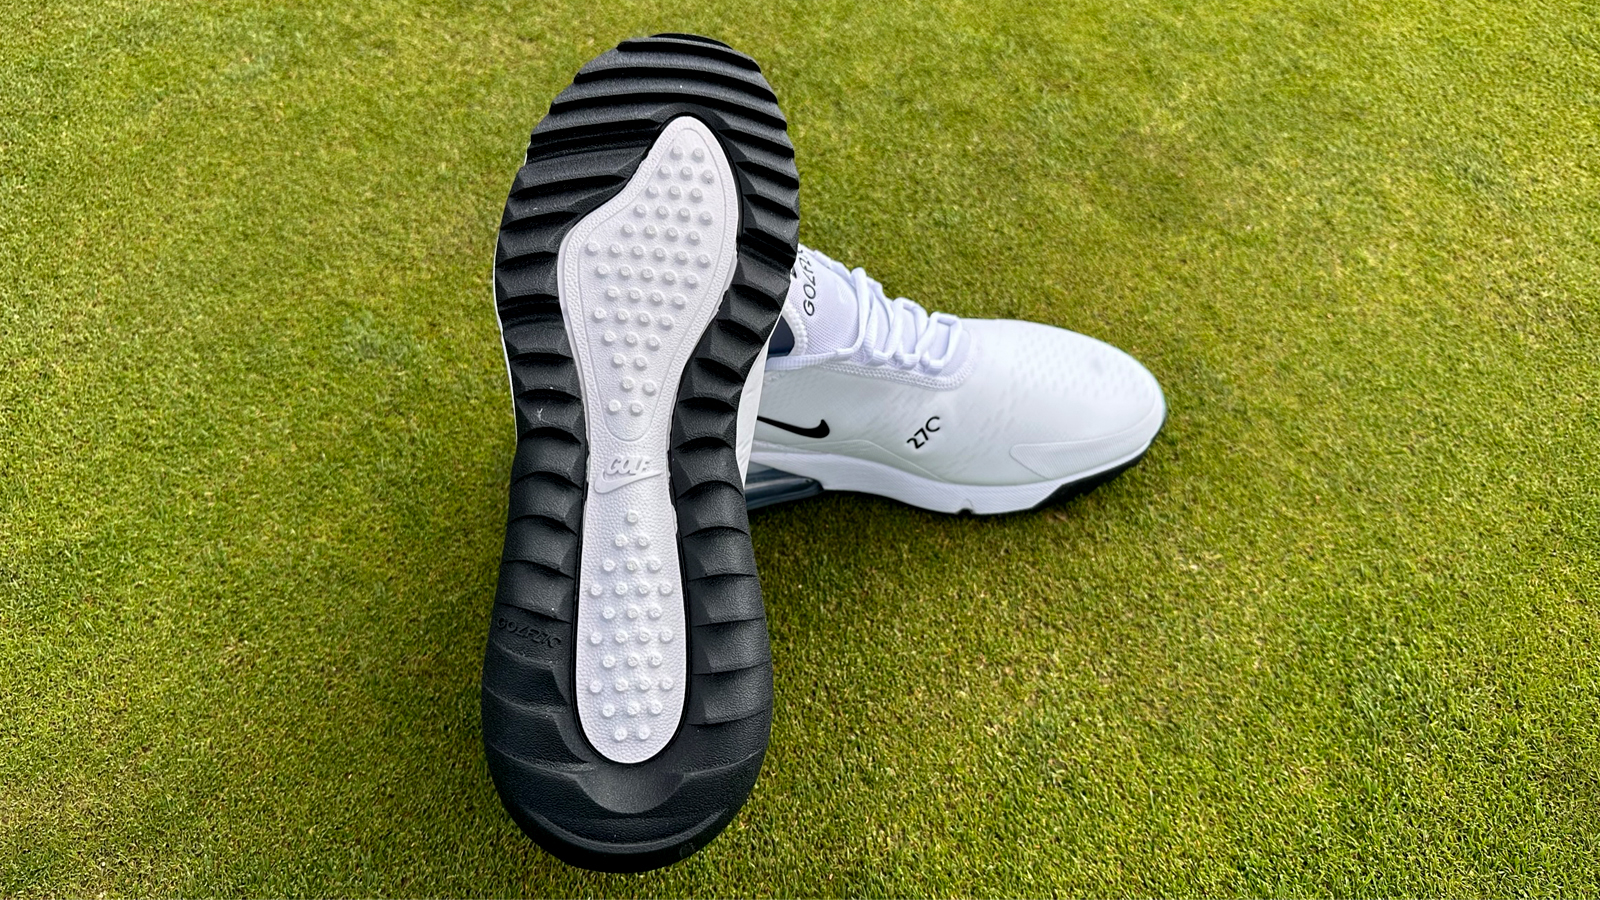 Nike Air Max 270 G Golf Shoe Review